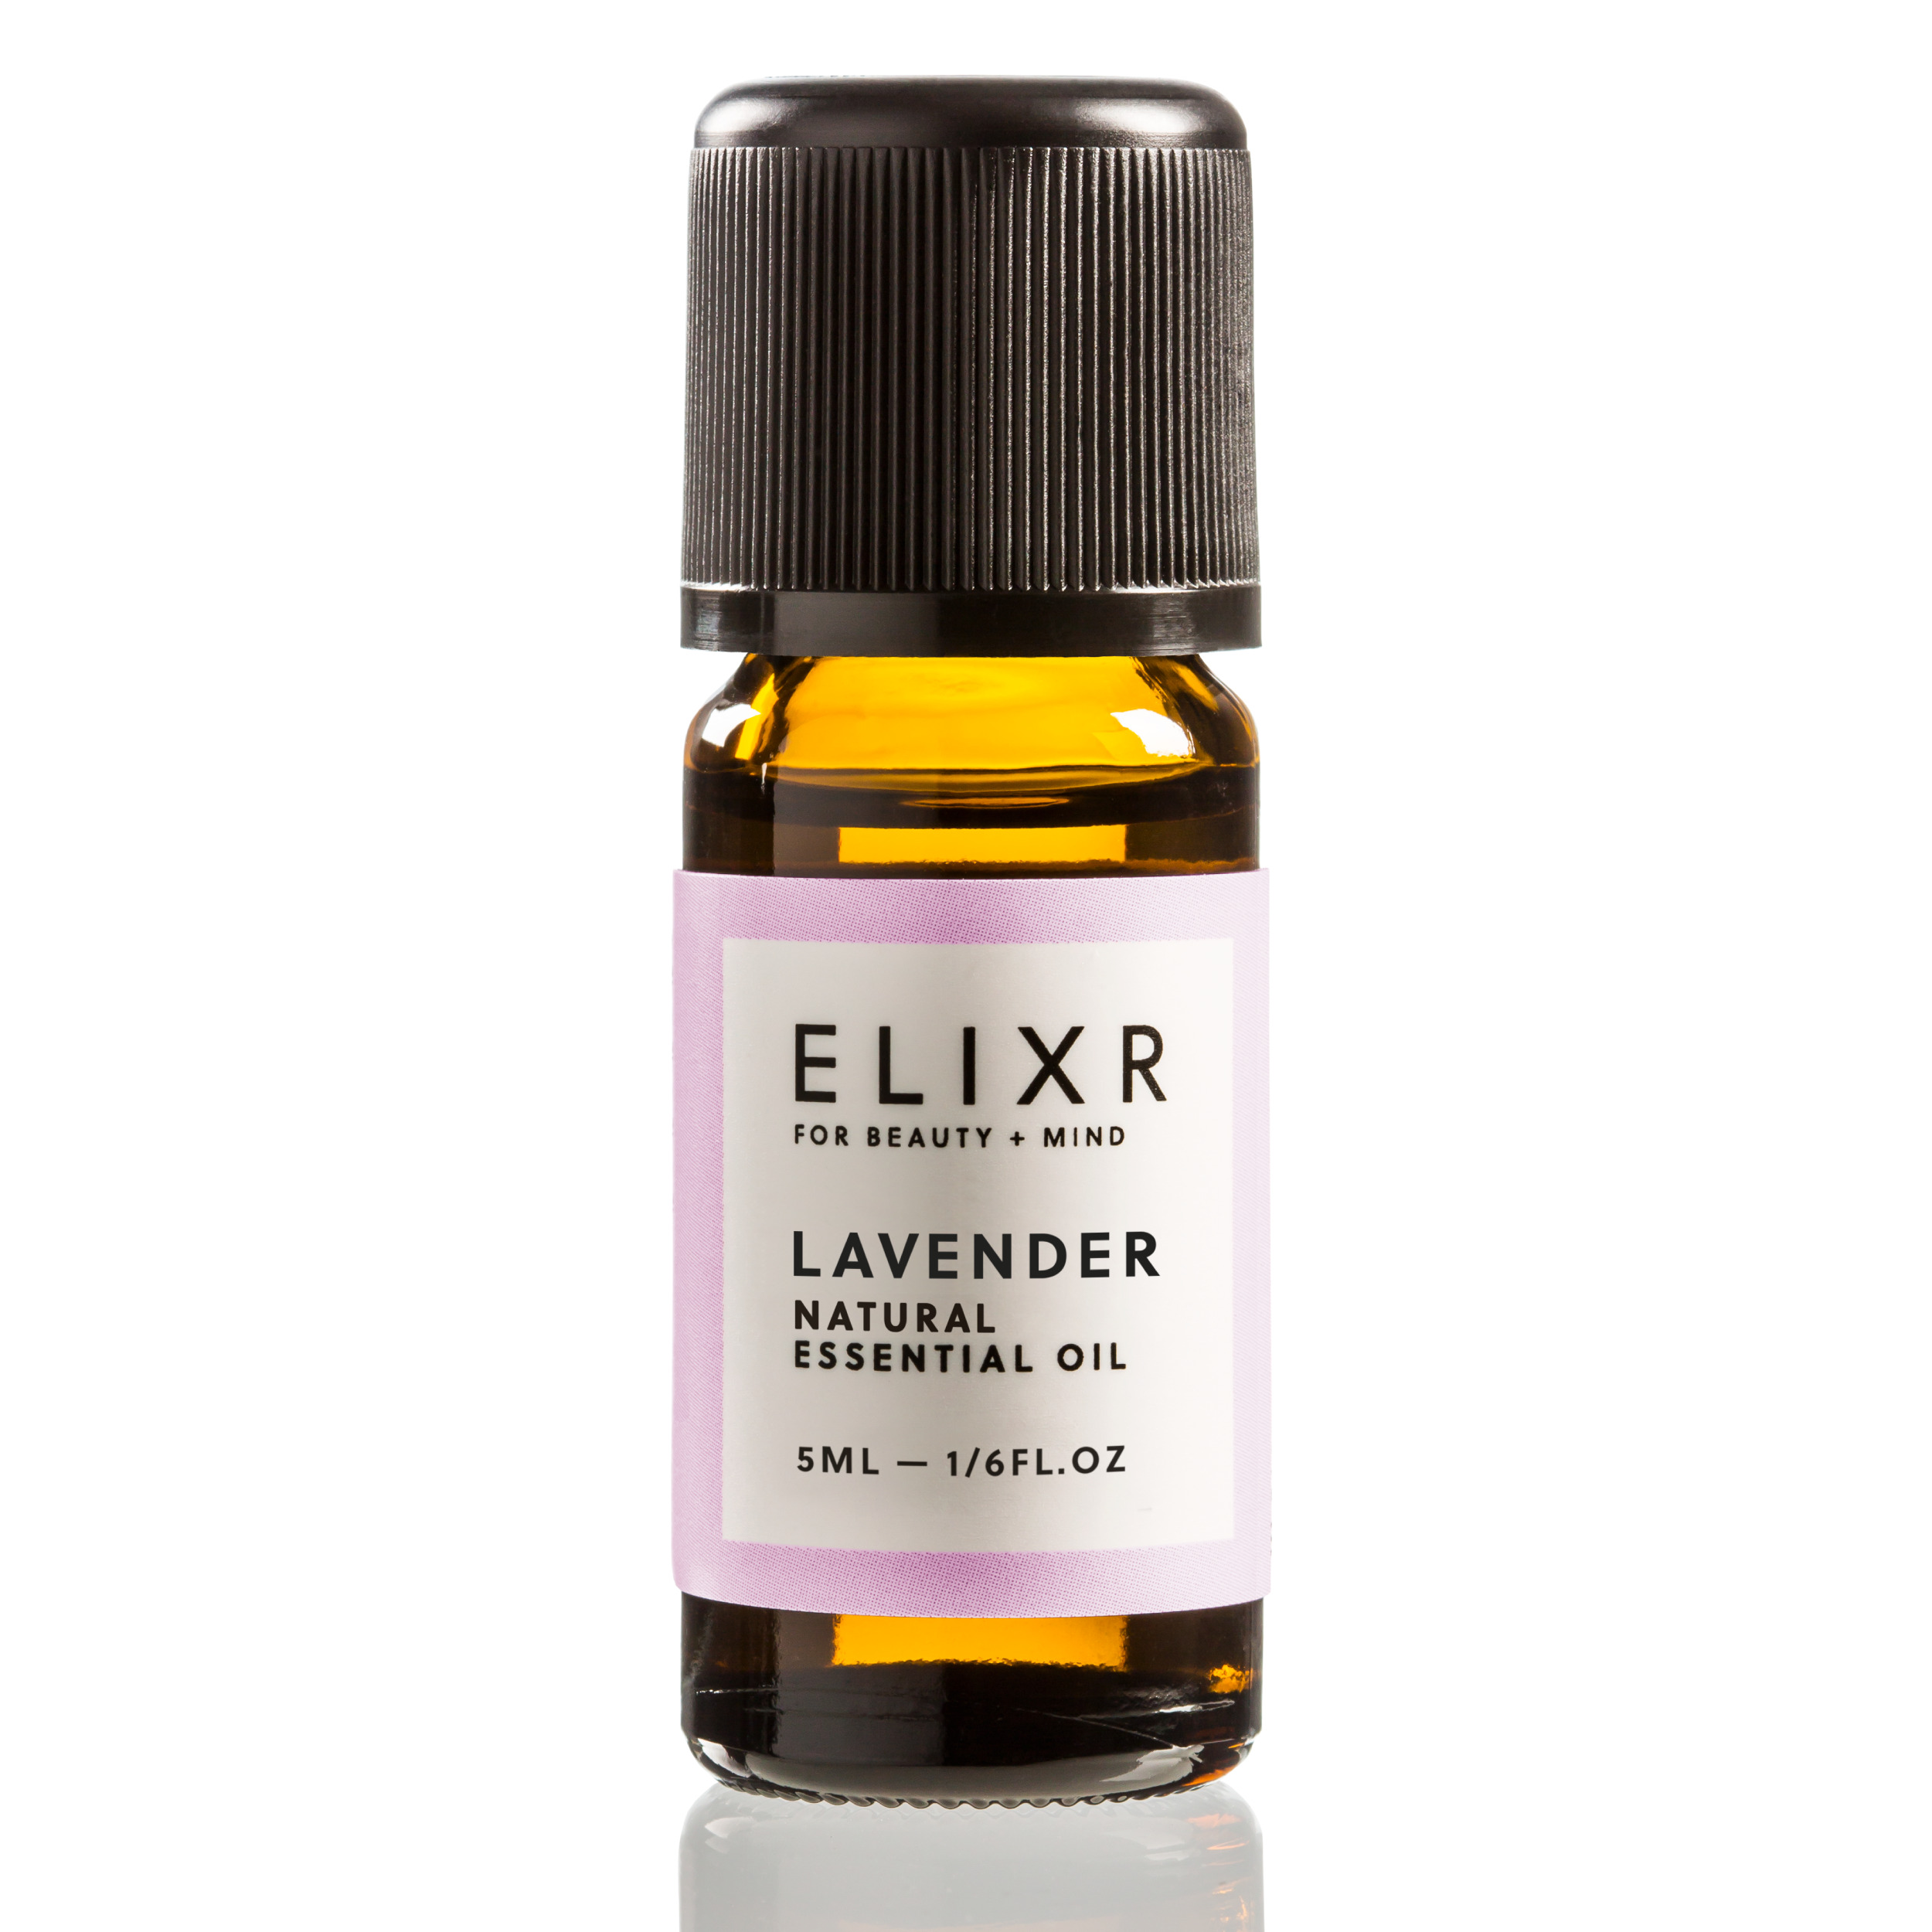 Elixr Lavender Natural Essential Oil 5ml